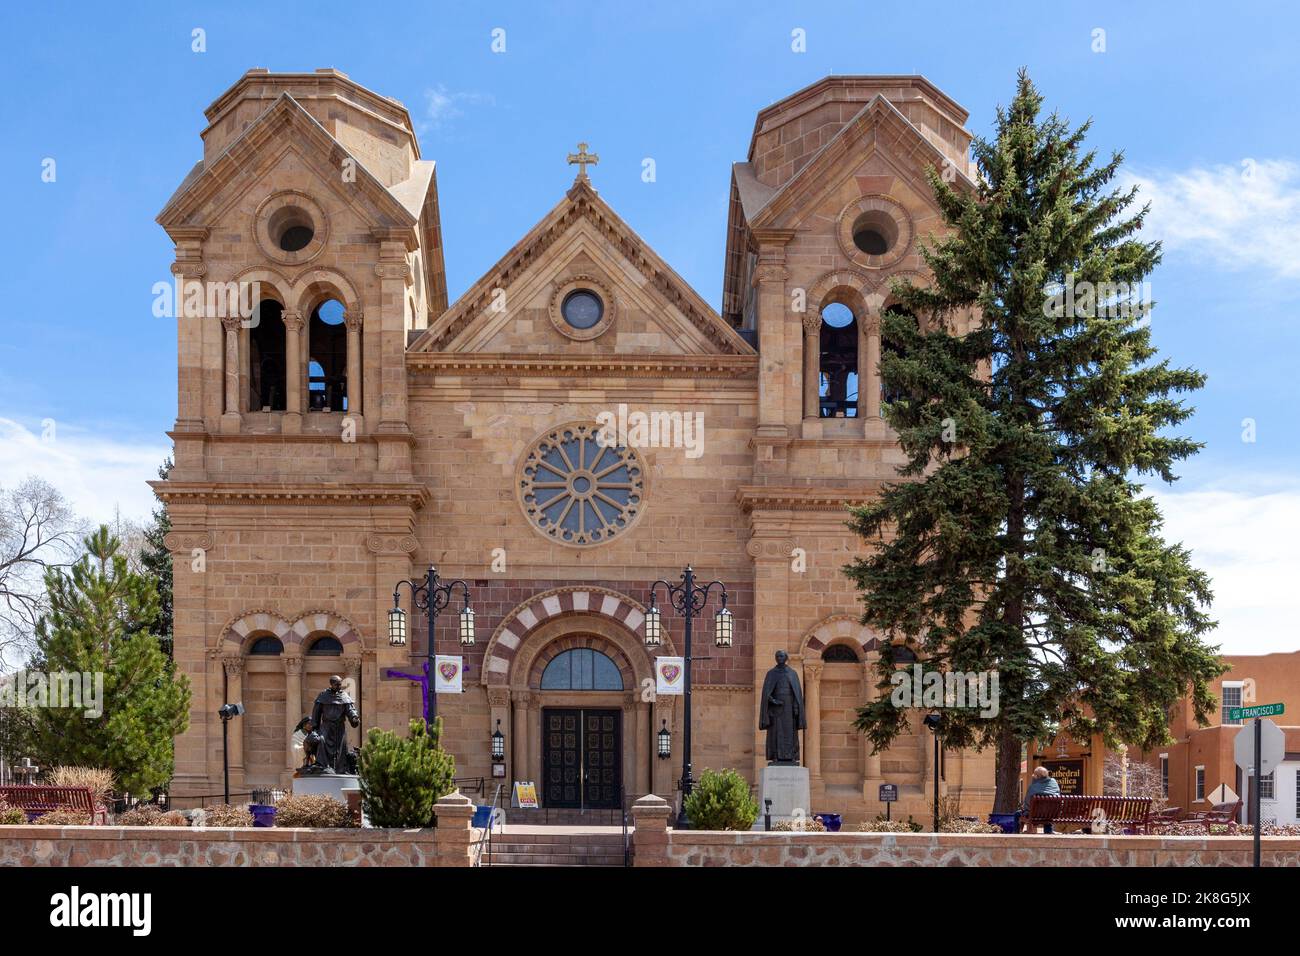 19th Century Cathedral Basilica of Saint Francis of Assisi - Catedral basílica de San Francisco de Asís in Santa Fe, New Mexico was dedicated in 1887. Stock Photo